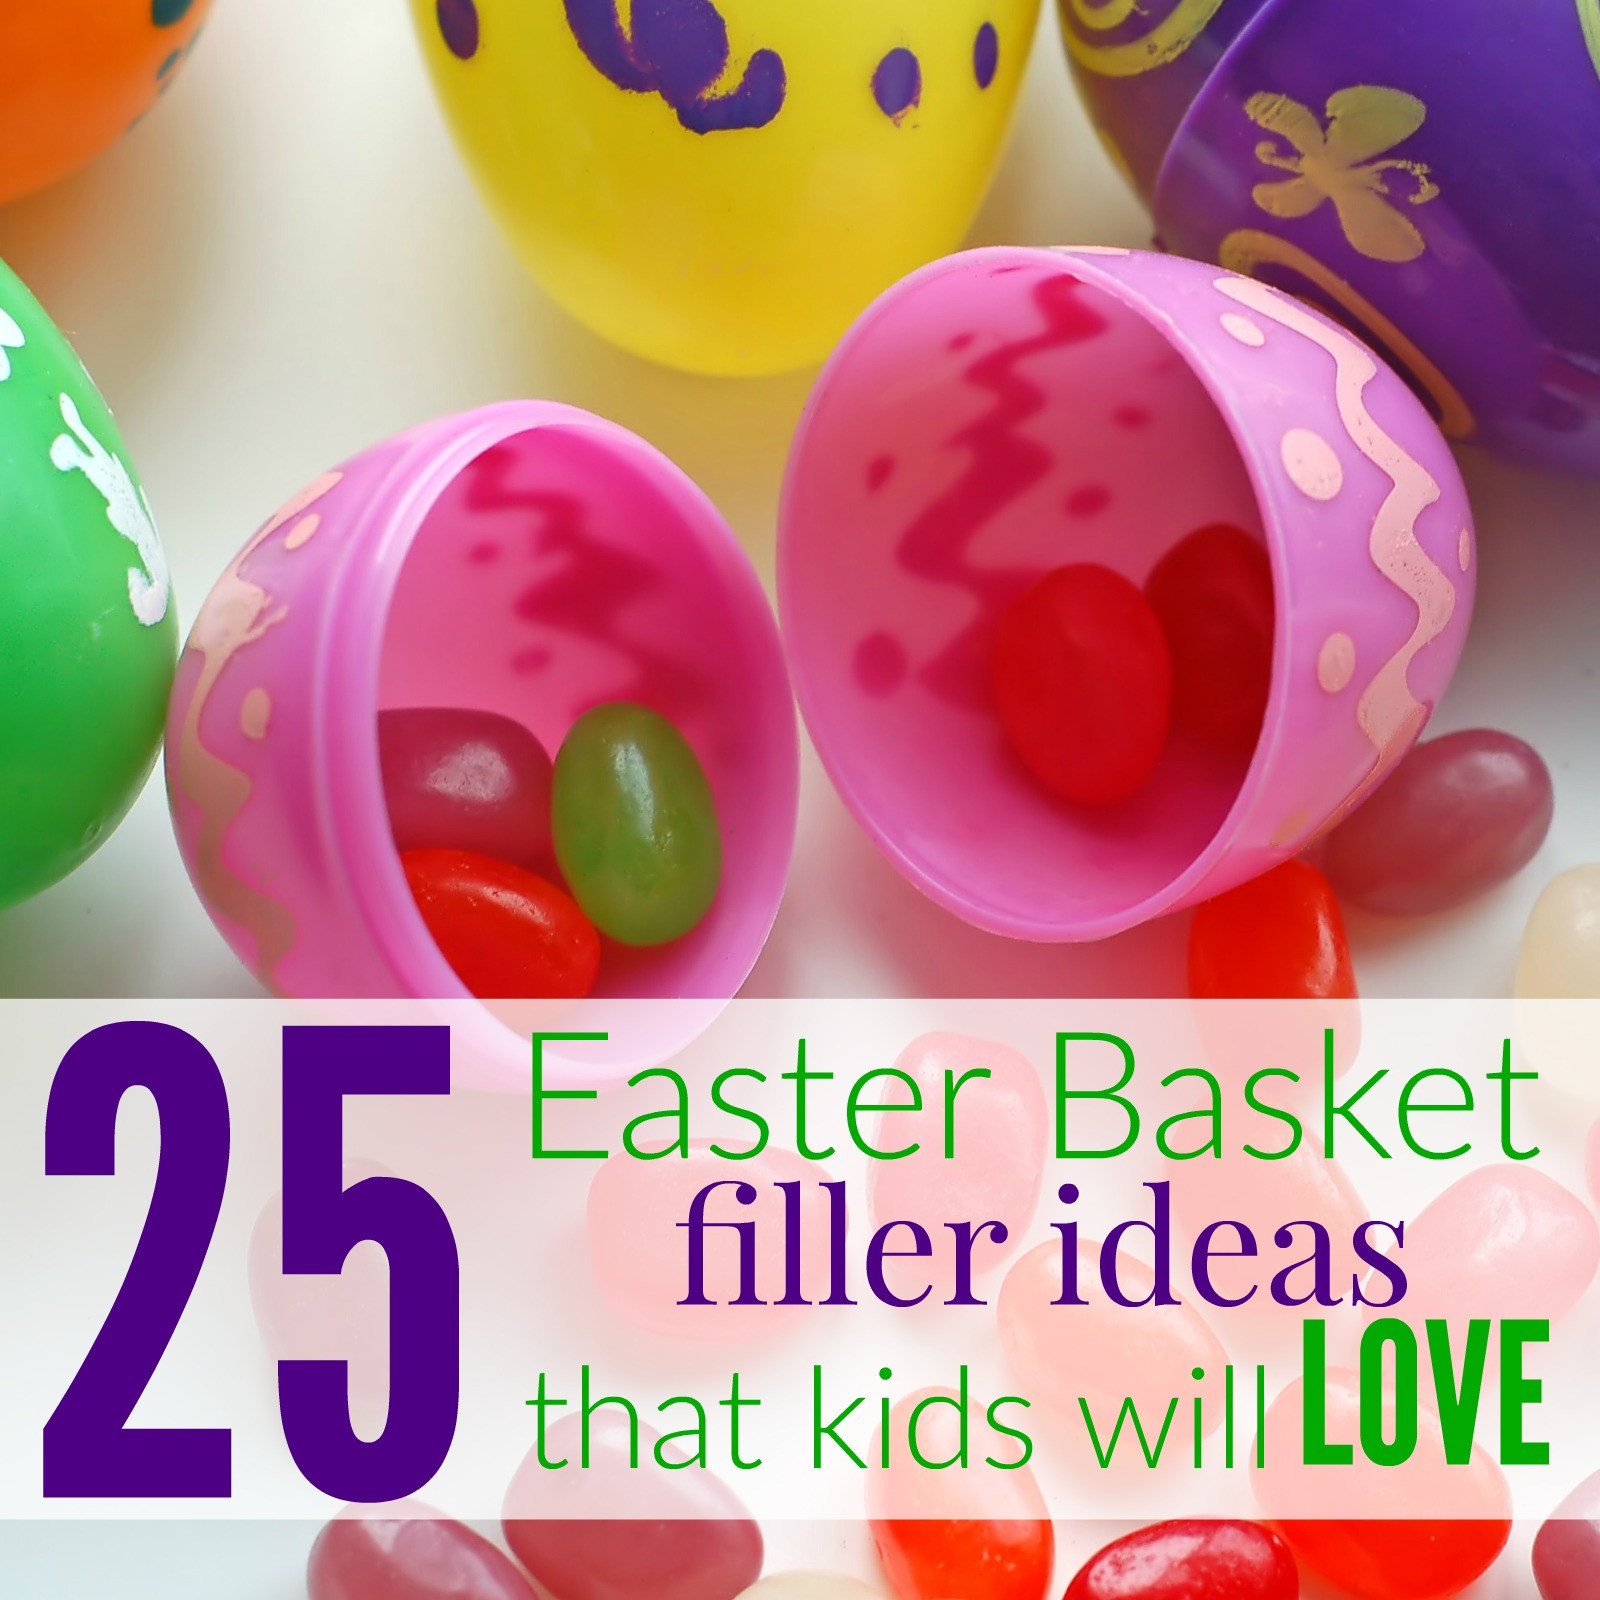 Gift Basket Filler Ideas
 25 Easter Basket Filler Ideas That Kids Will Love